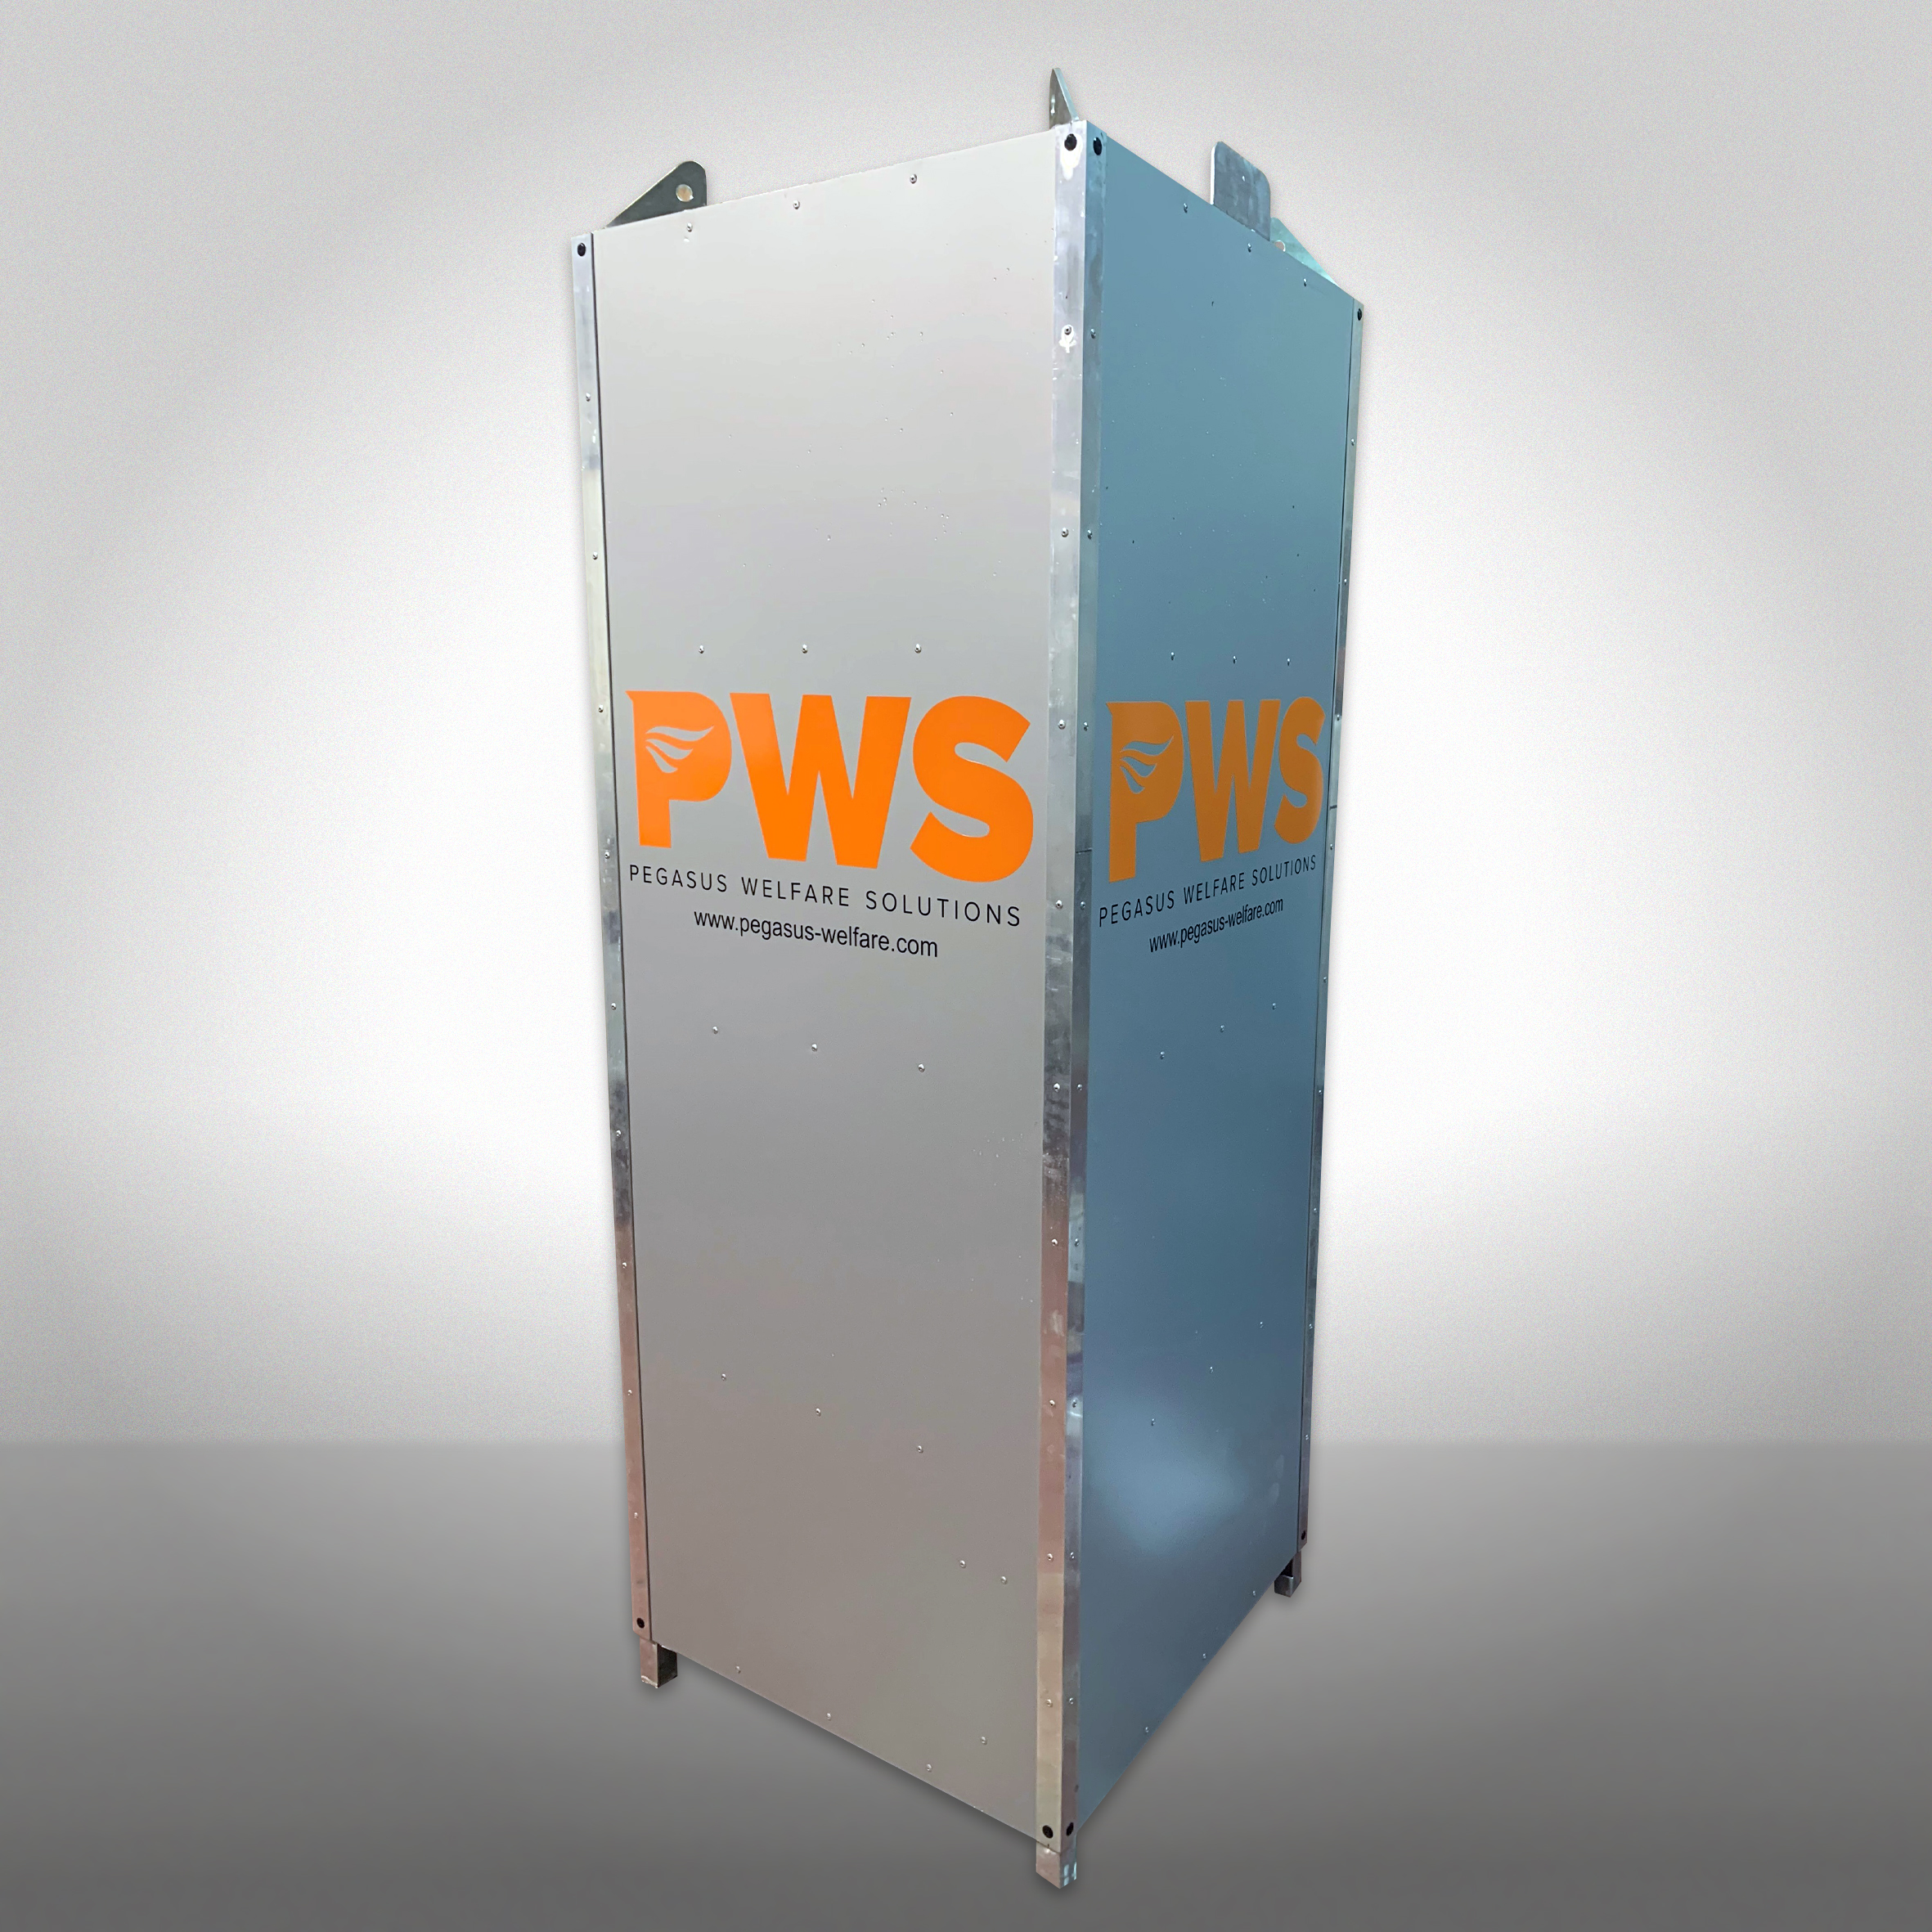 In-Tower Unit: Pegasus Welfare Solutions